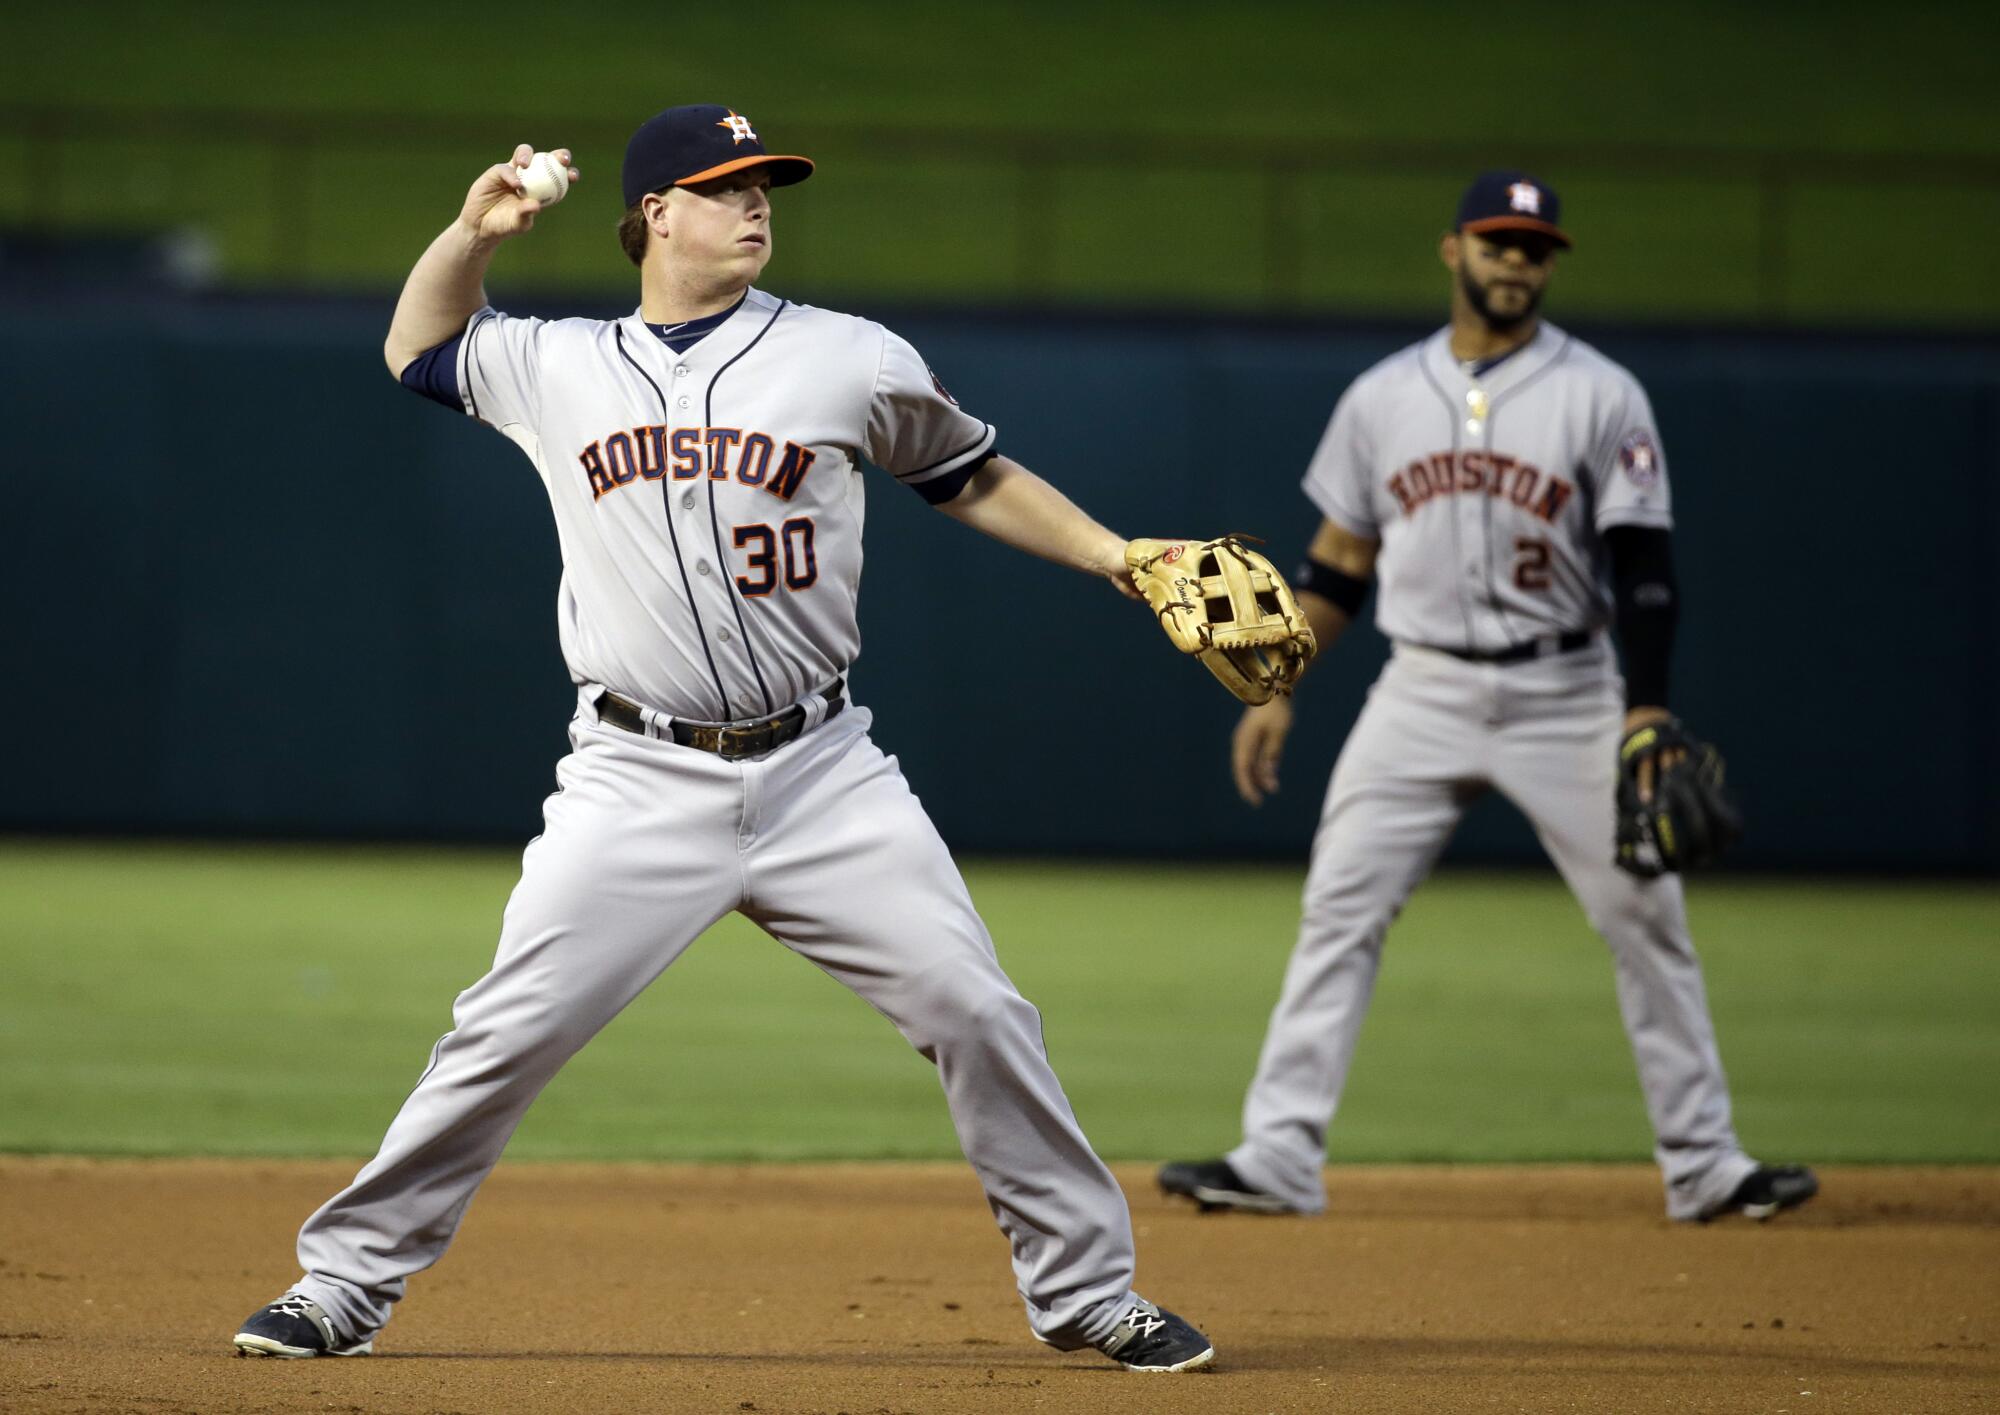 Houston Astros third baseman Matt Dominguez throws to first against the Texas Rangers in September 2014.